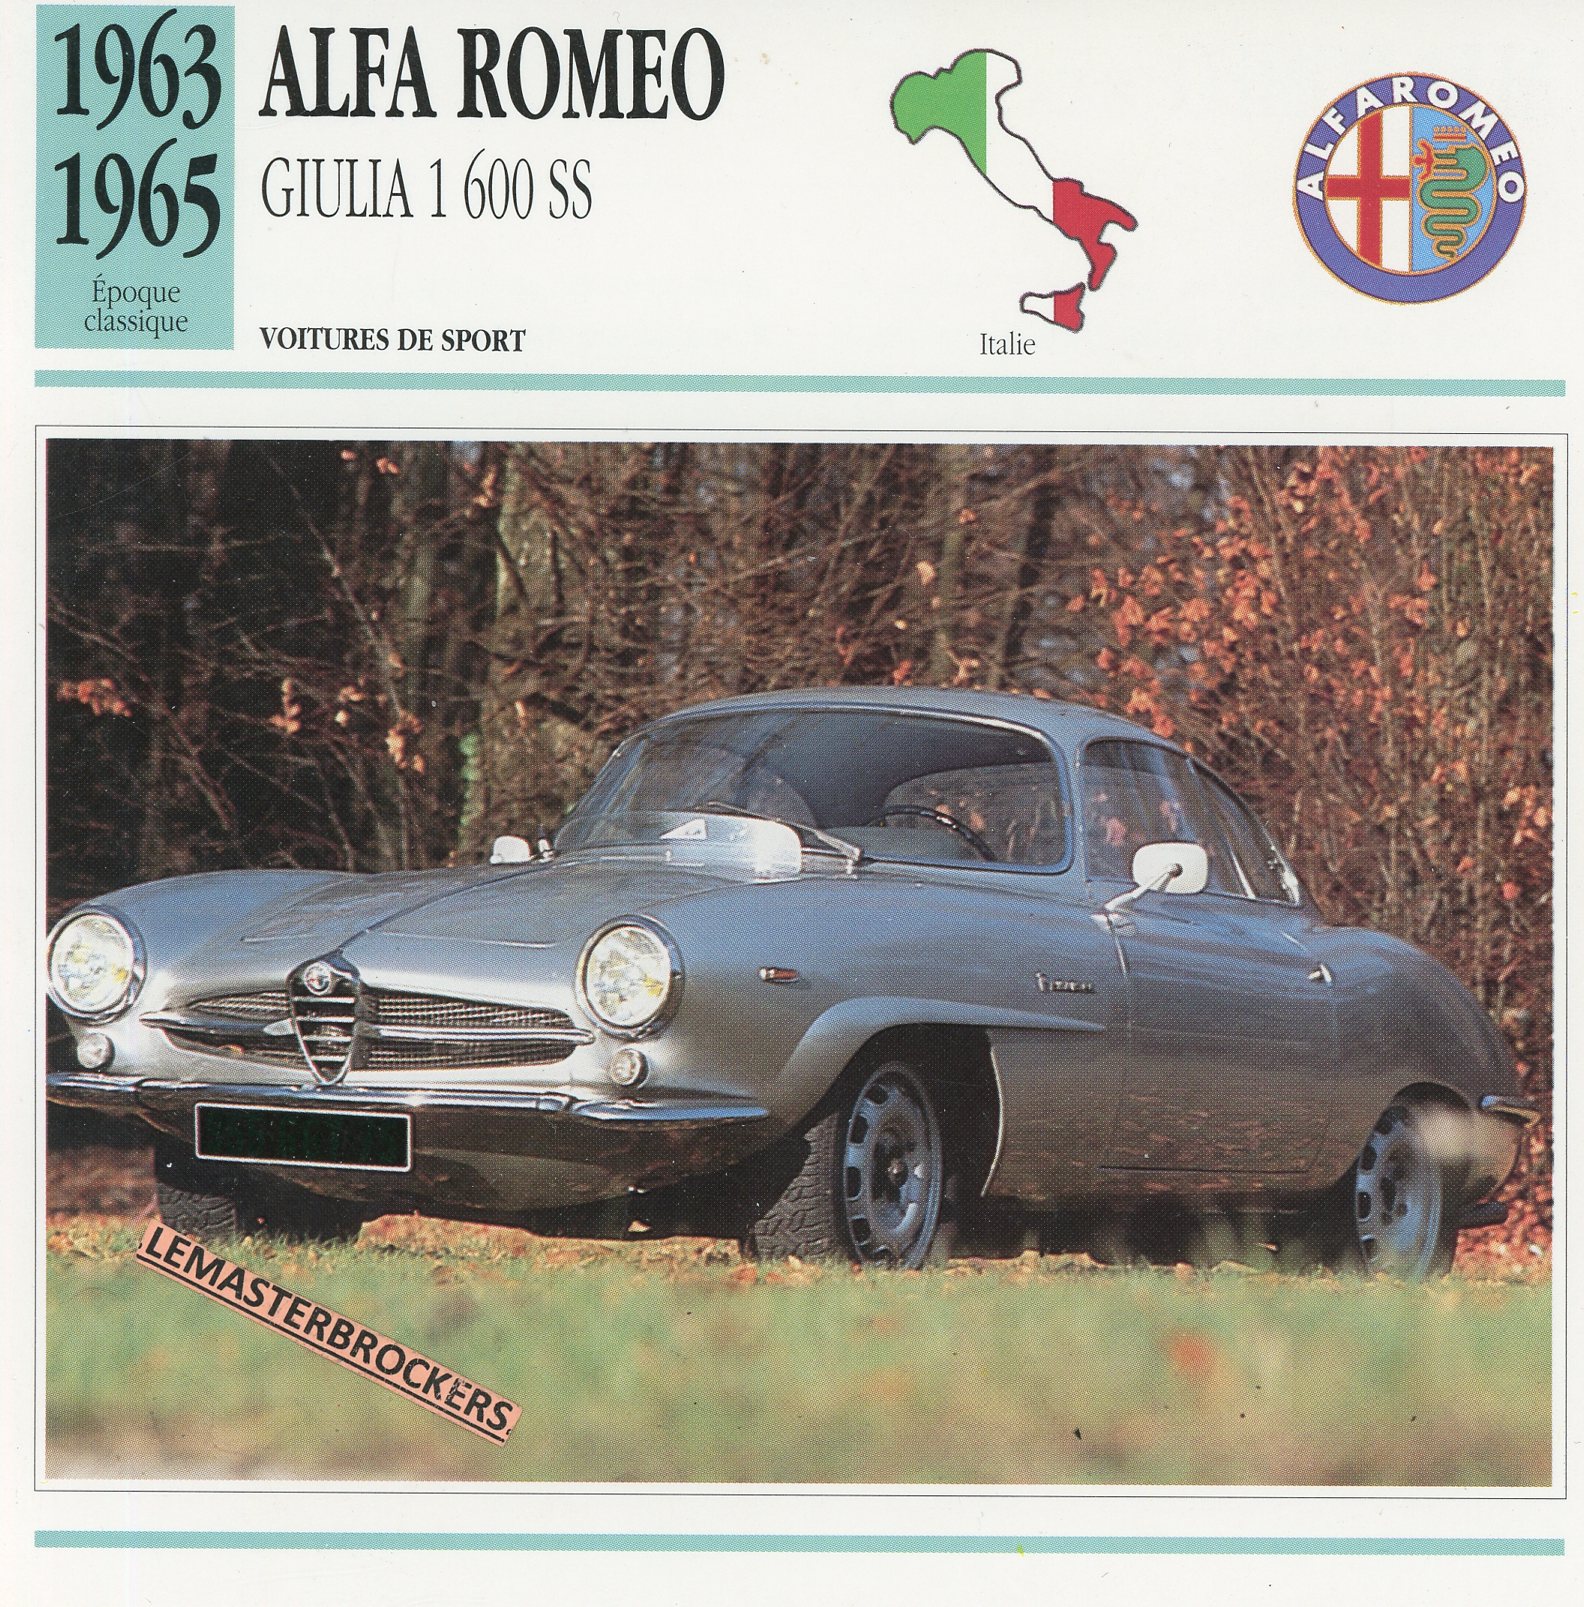 ALFA-ROMEO-GIULIA-1600SS-1963-1965-FICHE-AUTO-CARS-CARD-ATLAS-LEMASTERBROCKERS